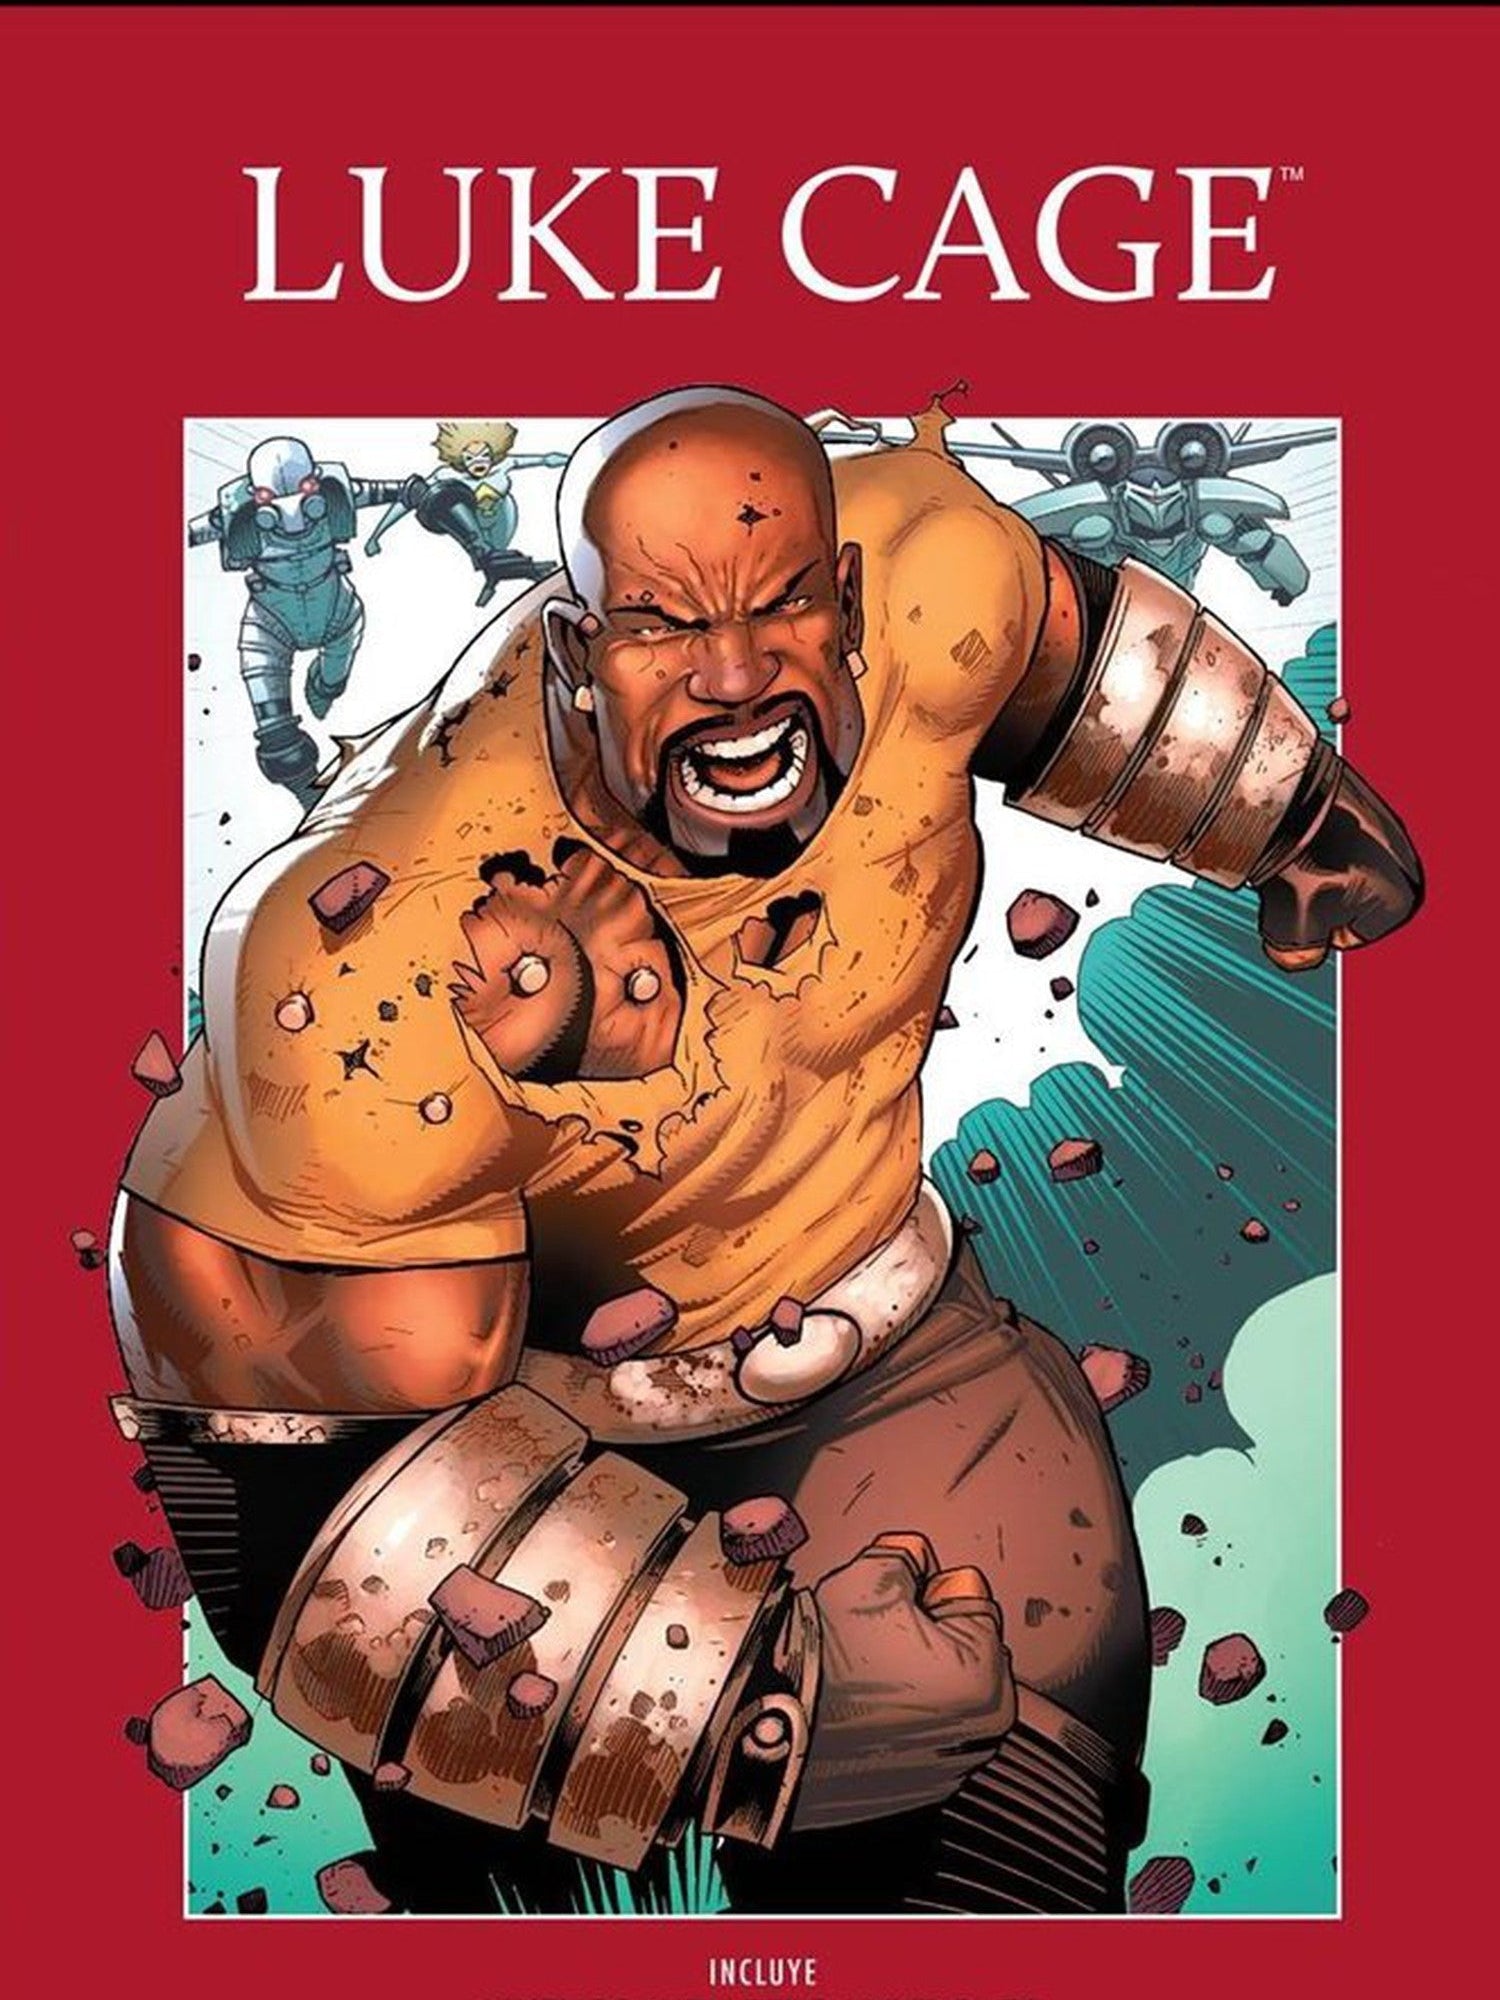 Luke Cage: Nuevos Avengers: Luke Cage + Power Man & Iron Fist Salvat ENcuadrocomics